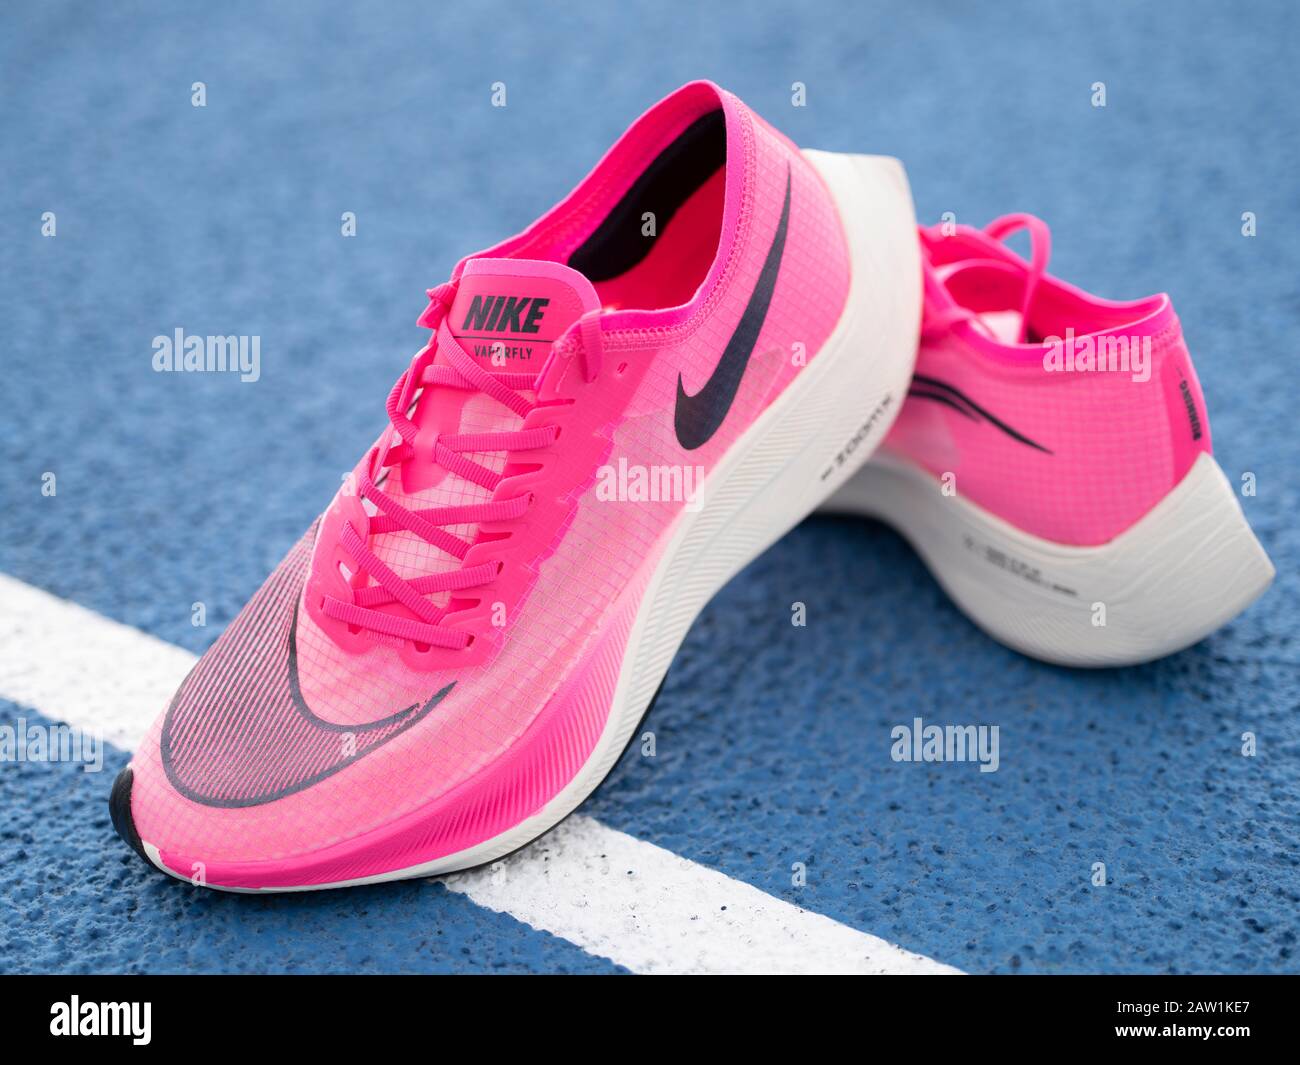 Nike ZoomX Vaporfly Next% Laufschuh in Rosa (Pink Blast/Guava Ice/Black)  Rekordschuh Carbon Aero Stockfotografie - Alamy